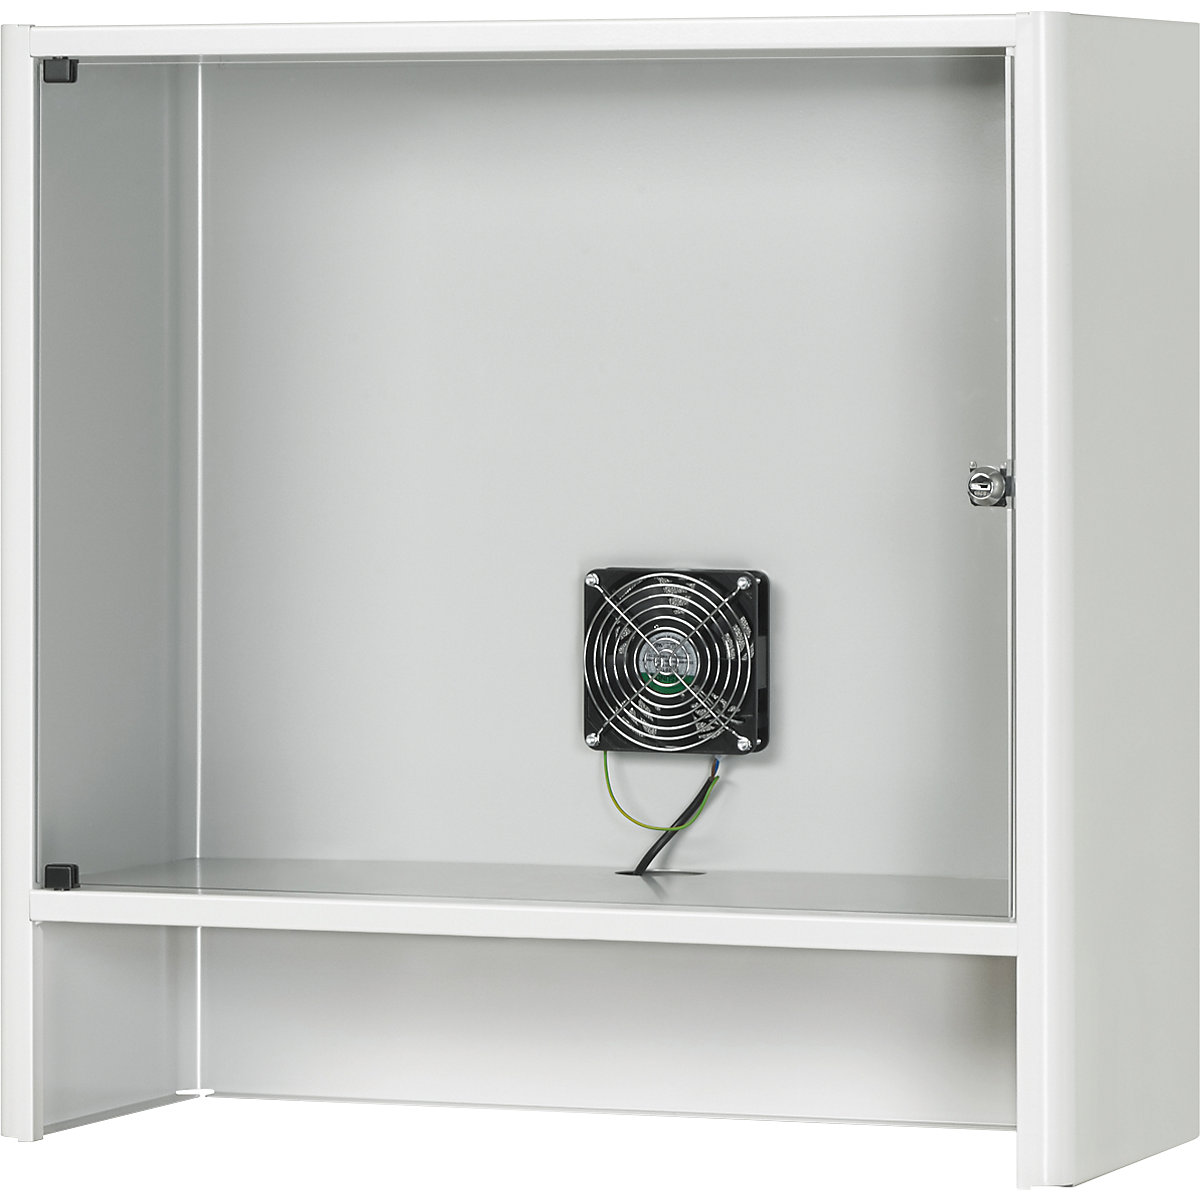 RAU – Carcasă pentru monitor cu ventilator activ integrat, î. x lăț. x ad. 710 x 720 x 300 mm, gri deschis RAL 7035